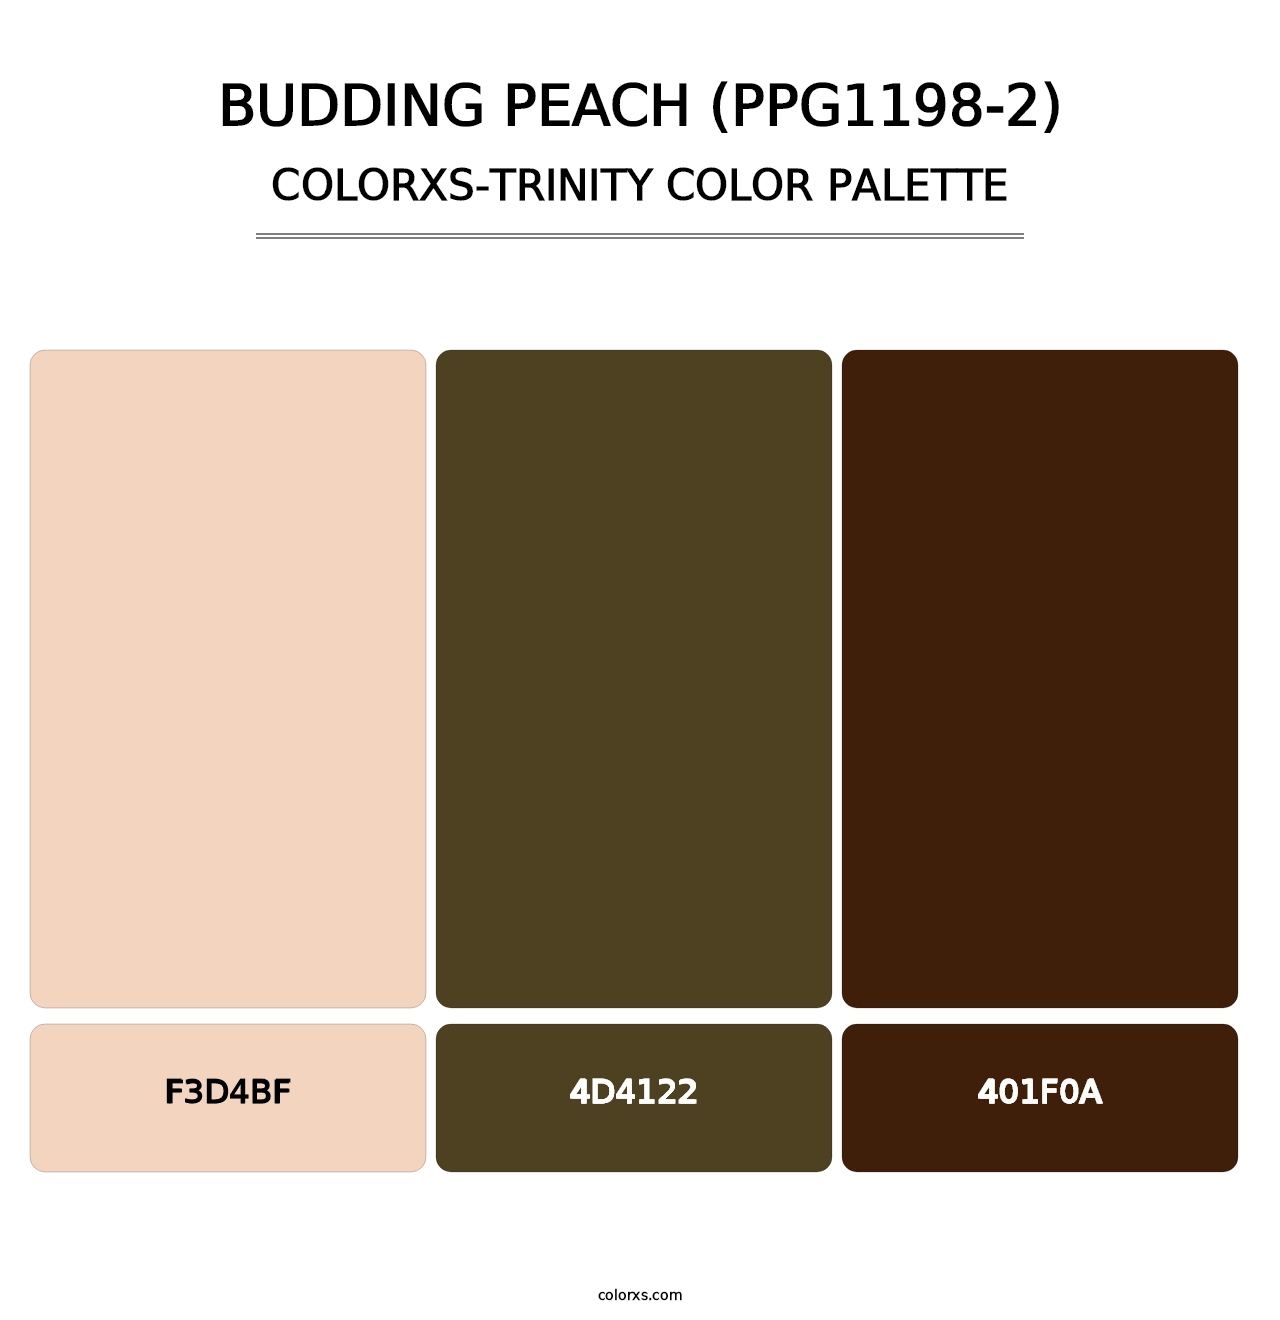 Budding Peach (PPG1198-2) - Colorxs Trinity Palette